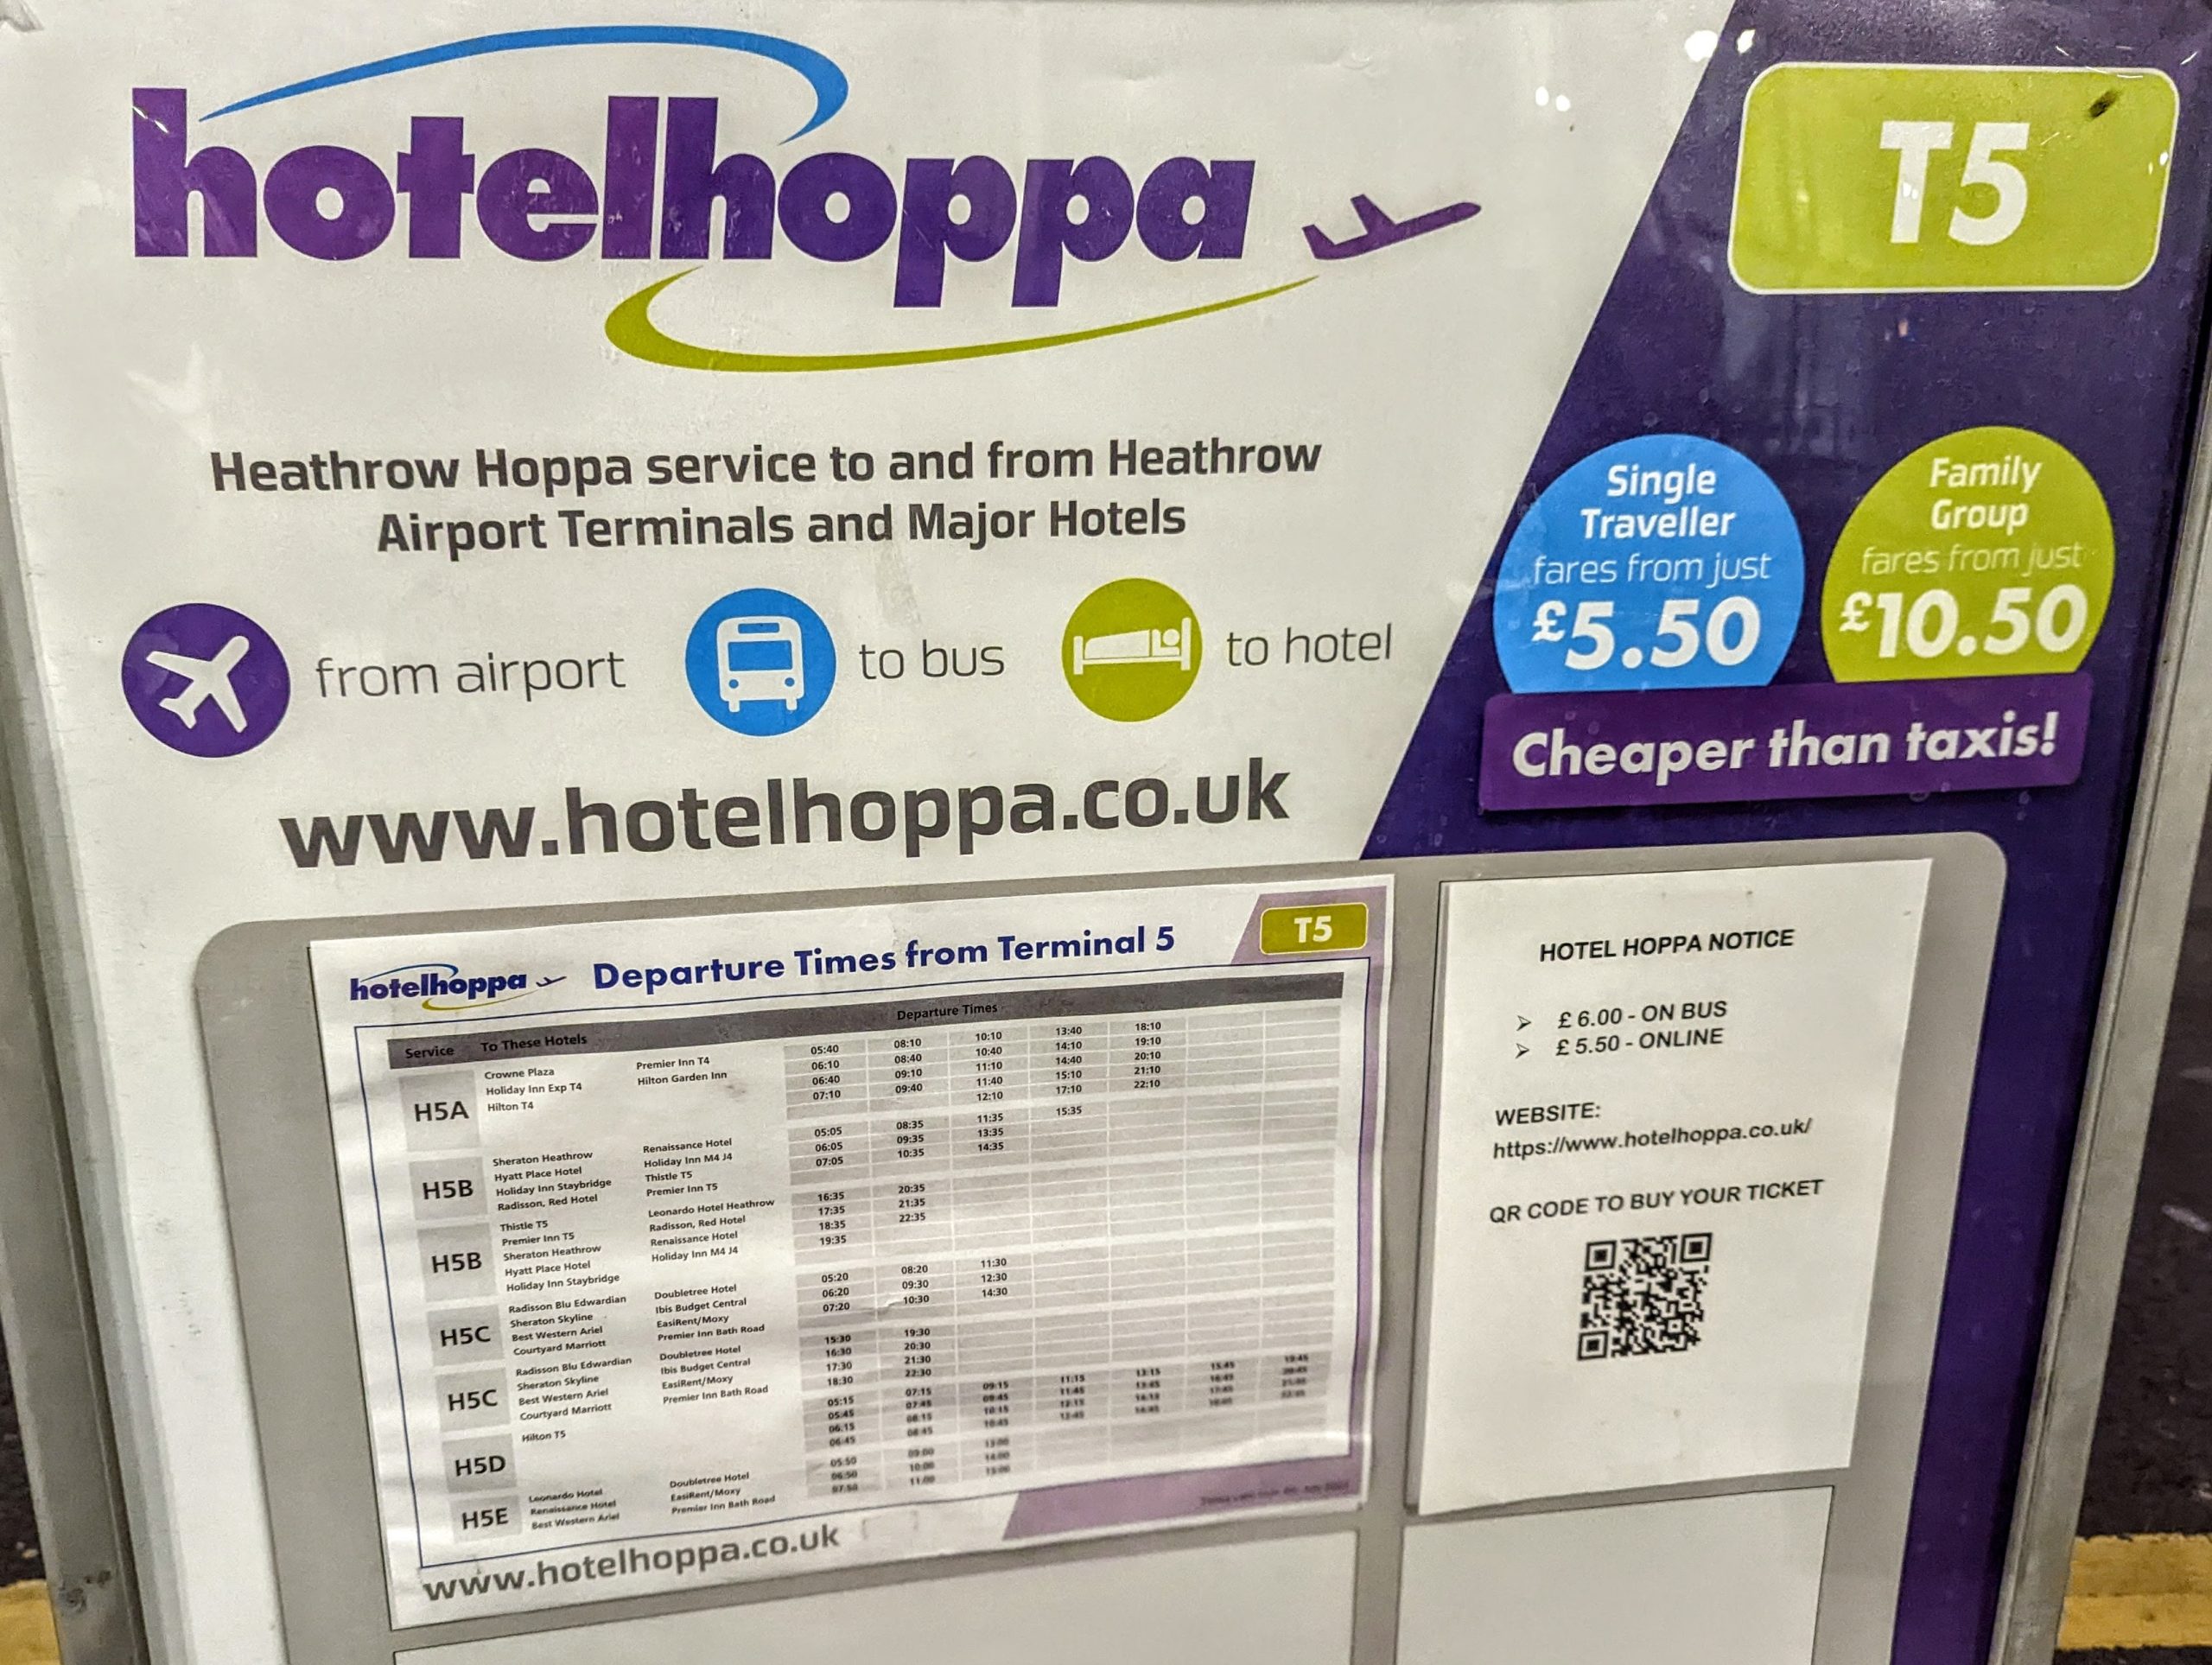 Hotel Hoppa bus schedule at Terminal 5